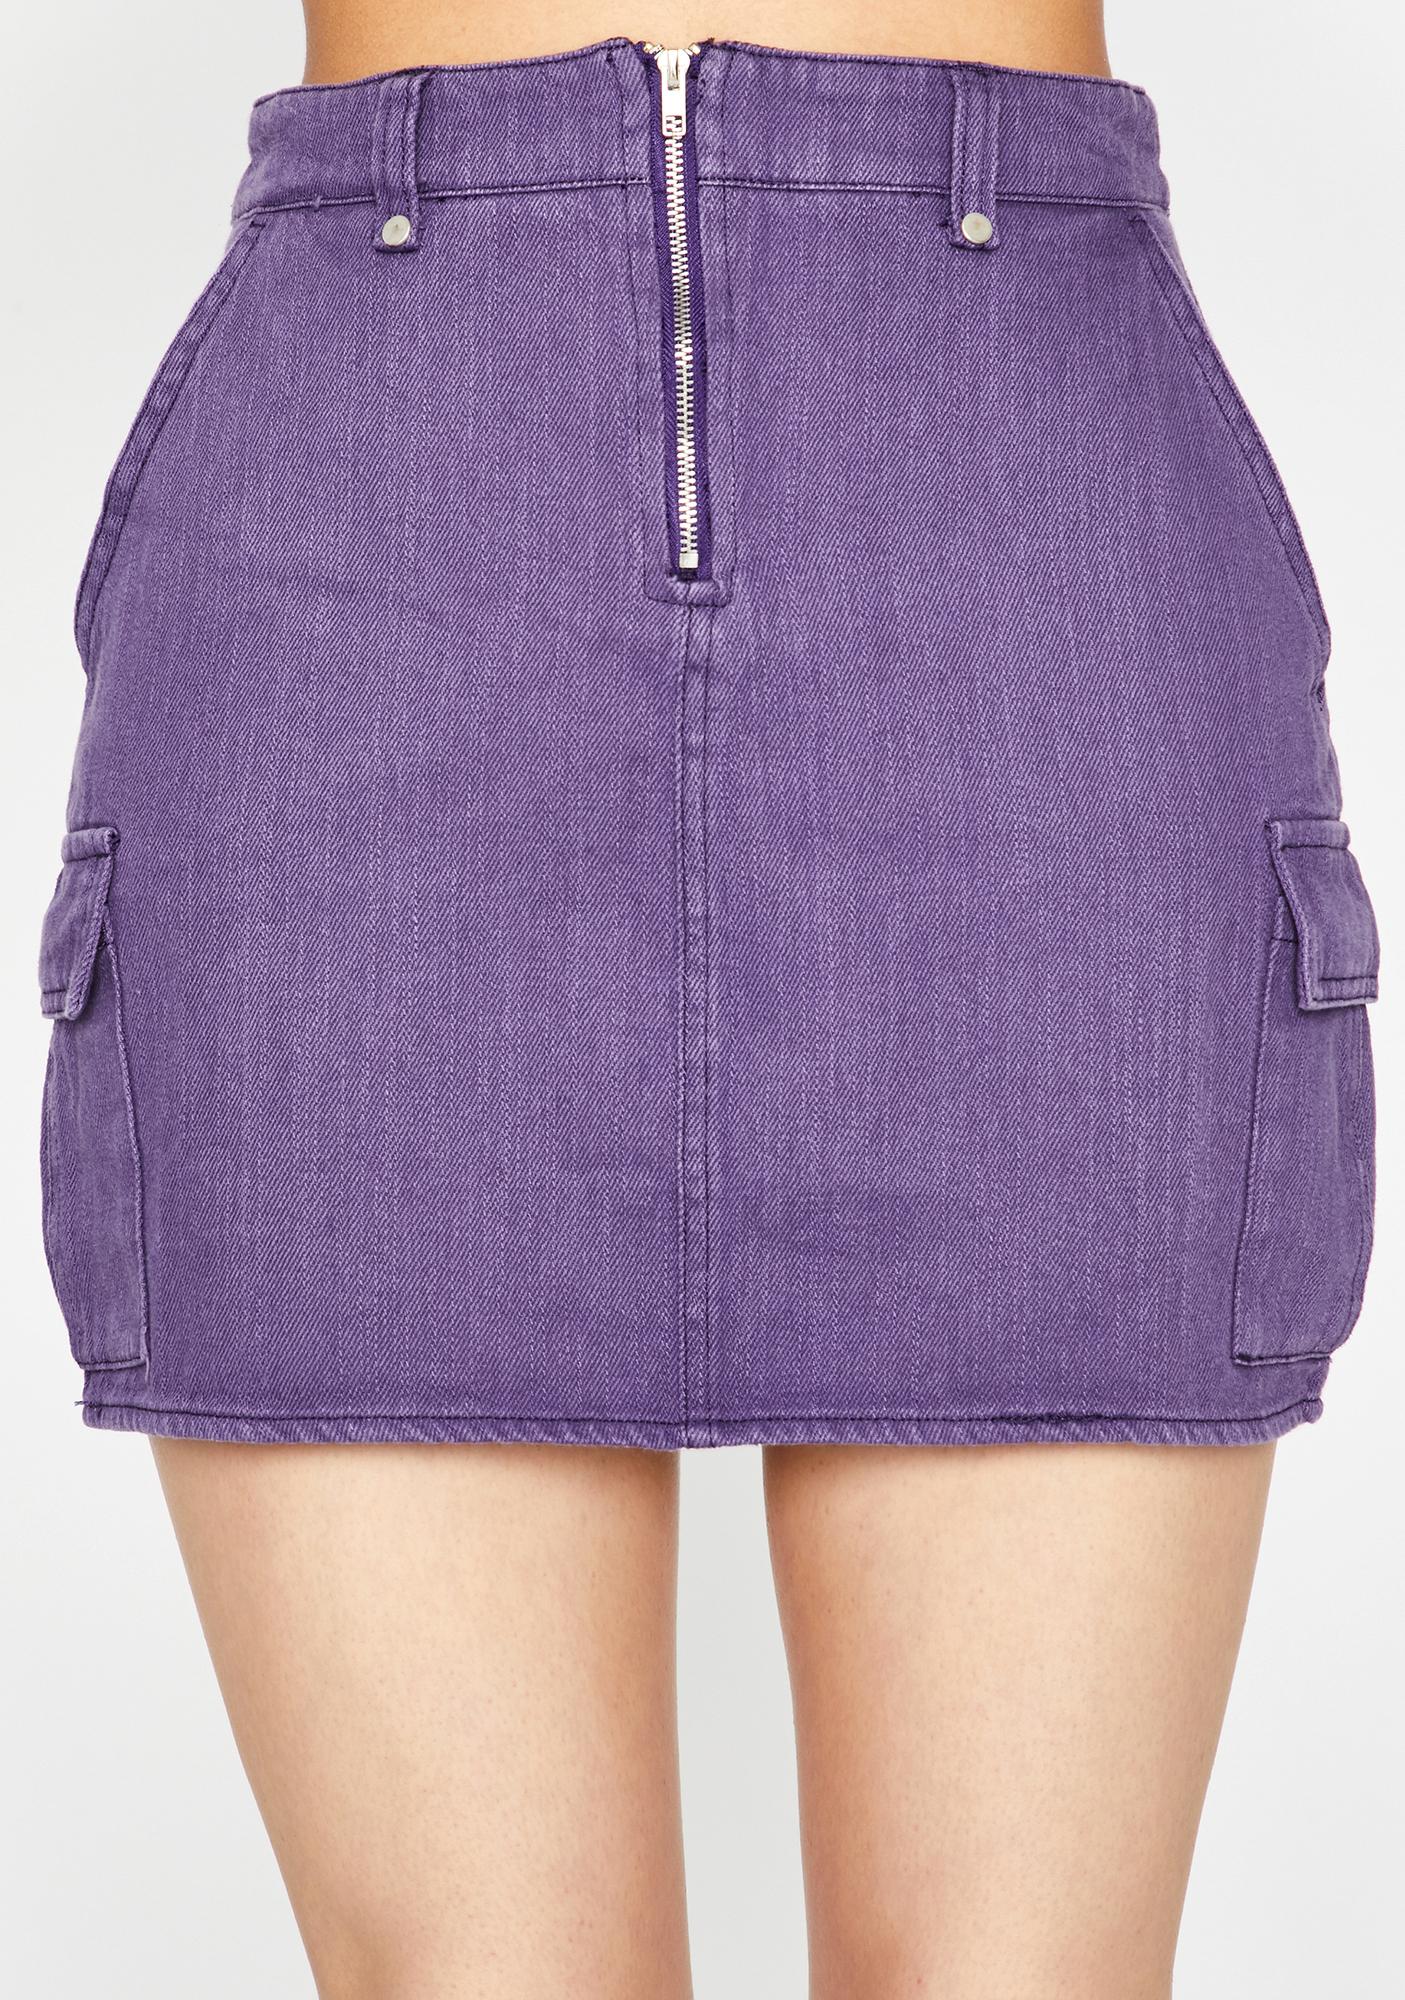 purple denim skirt